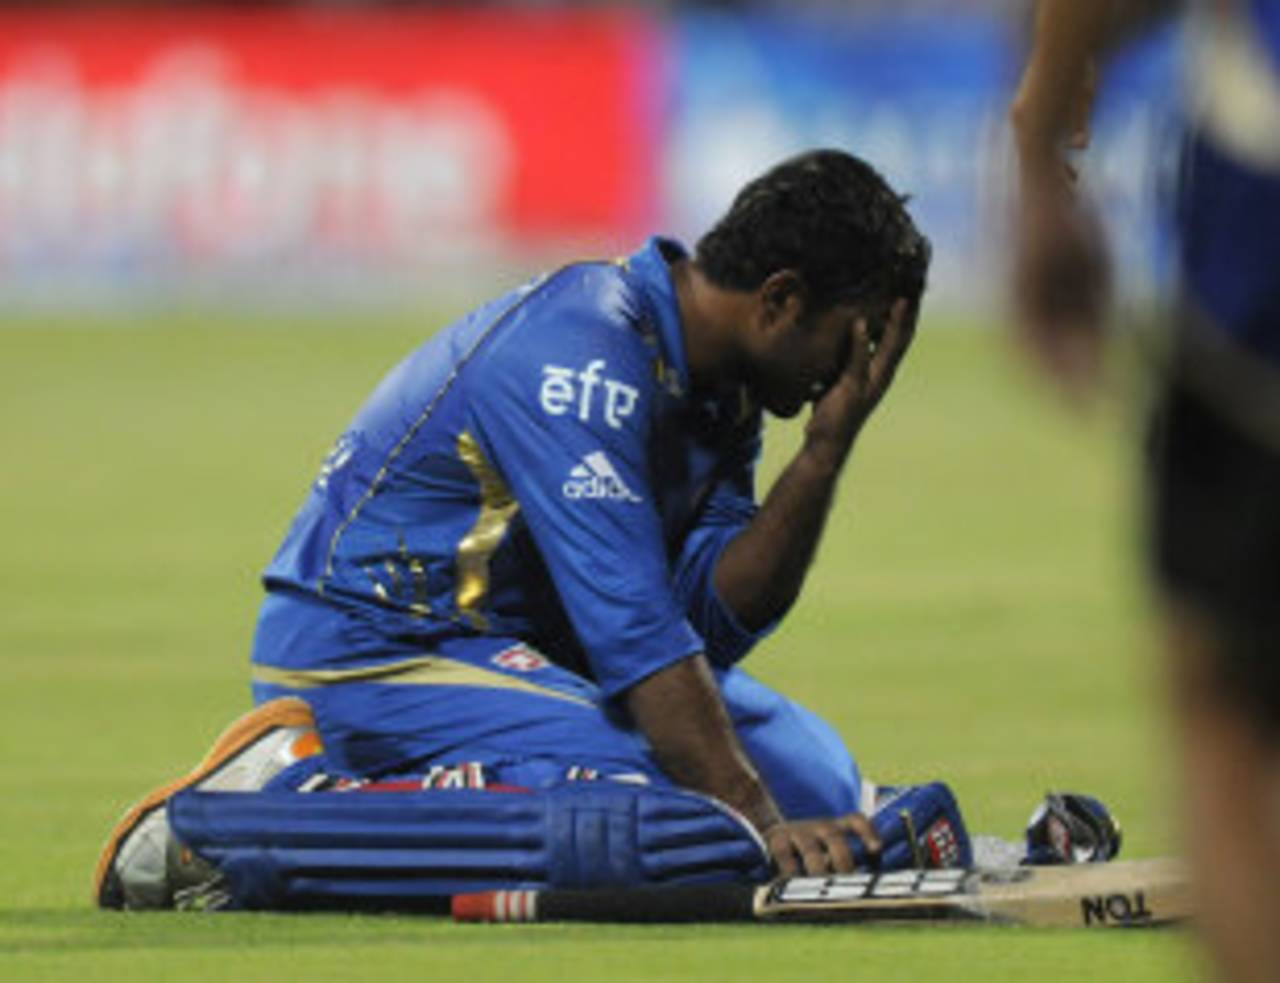 Ambati Rayudu is in tears after getting run out, Mumbai Indians v Rajasthan Royals, IPL 2014, Mumbai, May 25, 2014